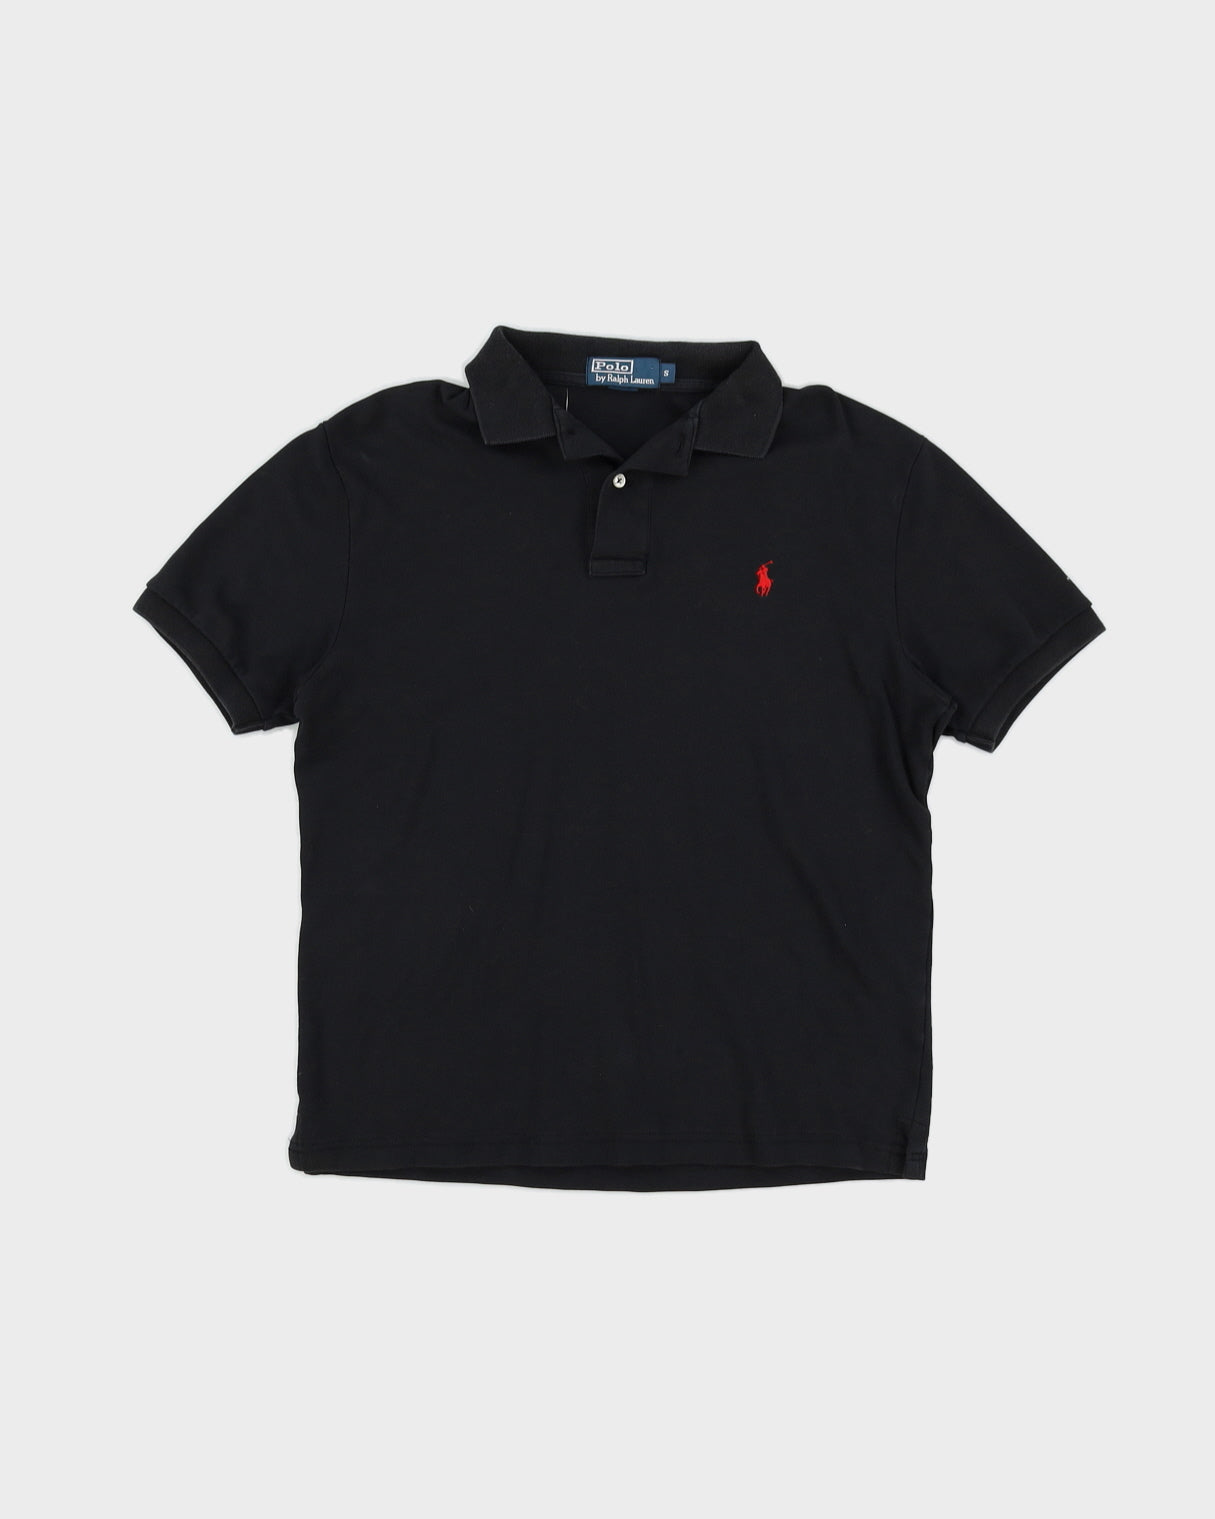 00s Polo Ralph Lauren Black Polo Shirt - S